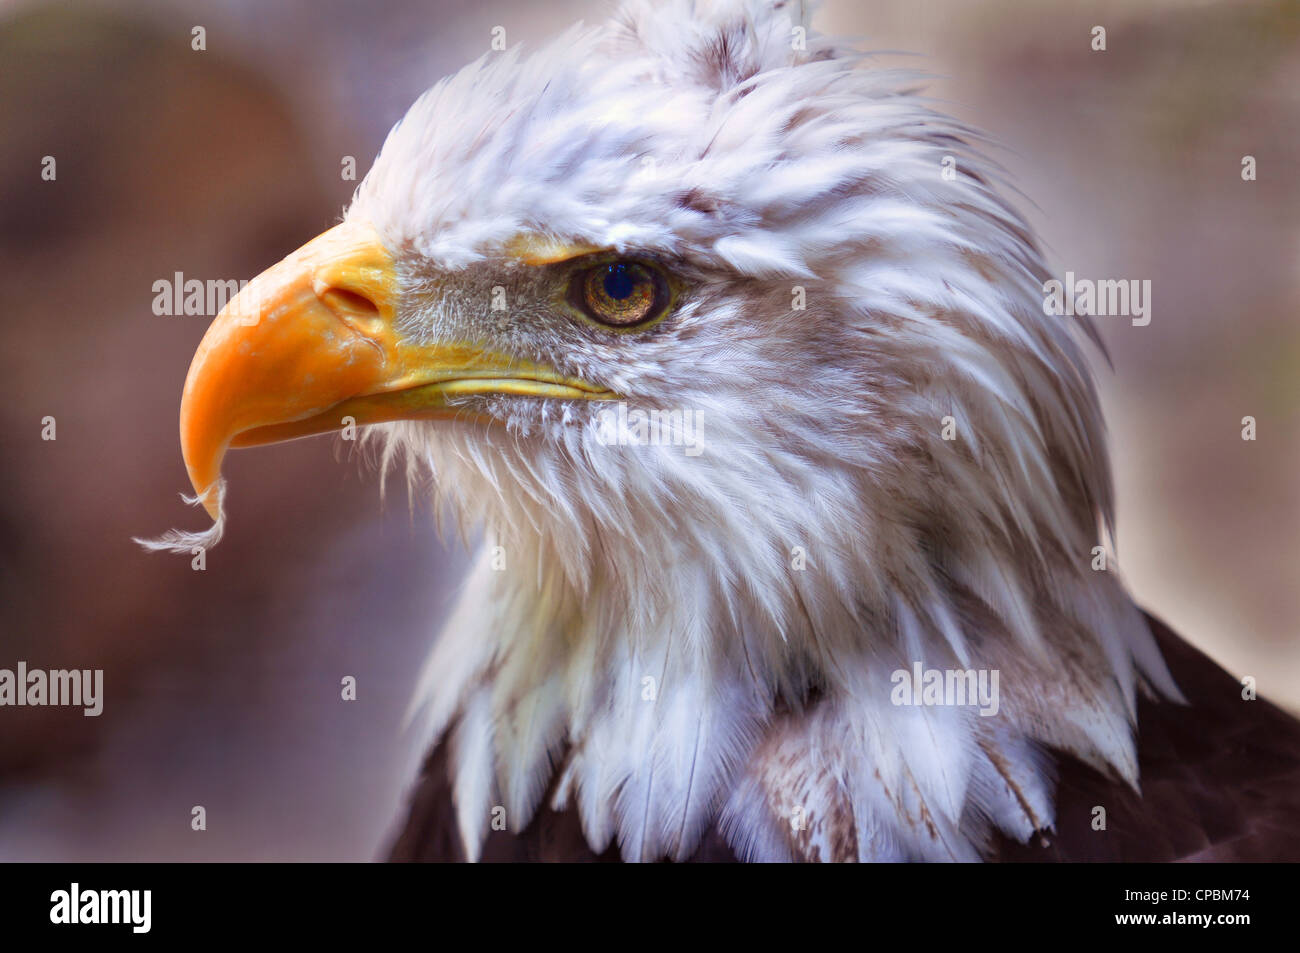 American bald eagle profile portrait close-up Stock Photo